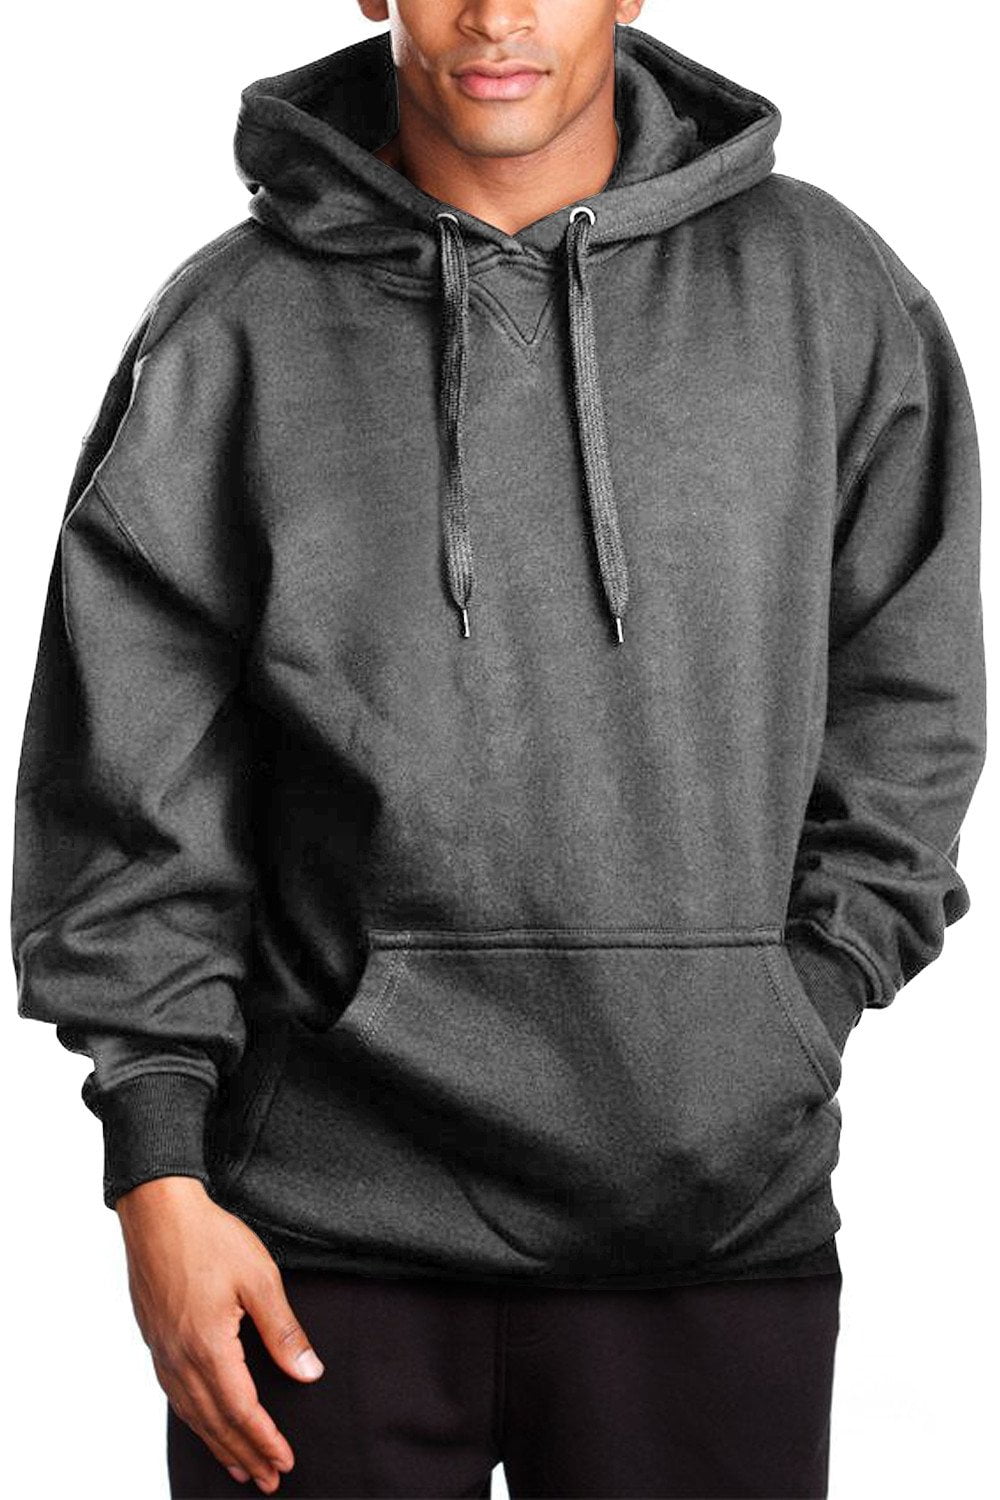 grey pullover hoodie men's